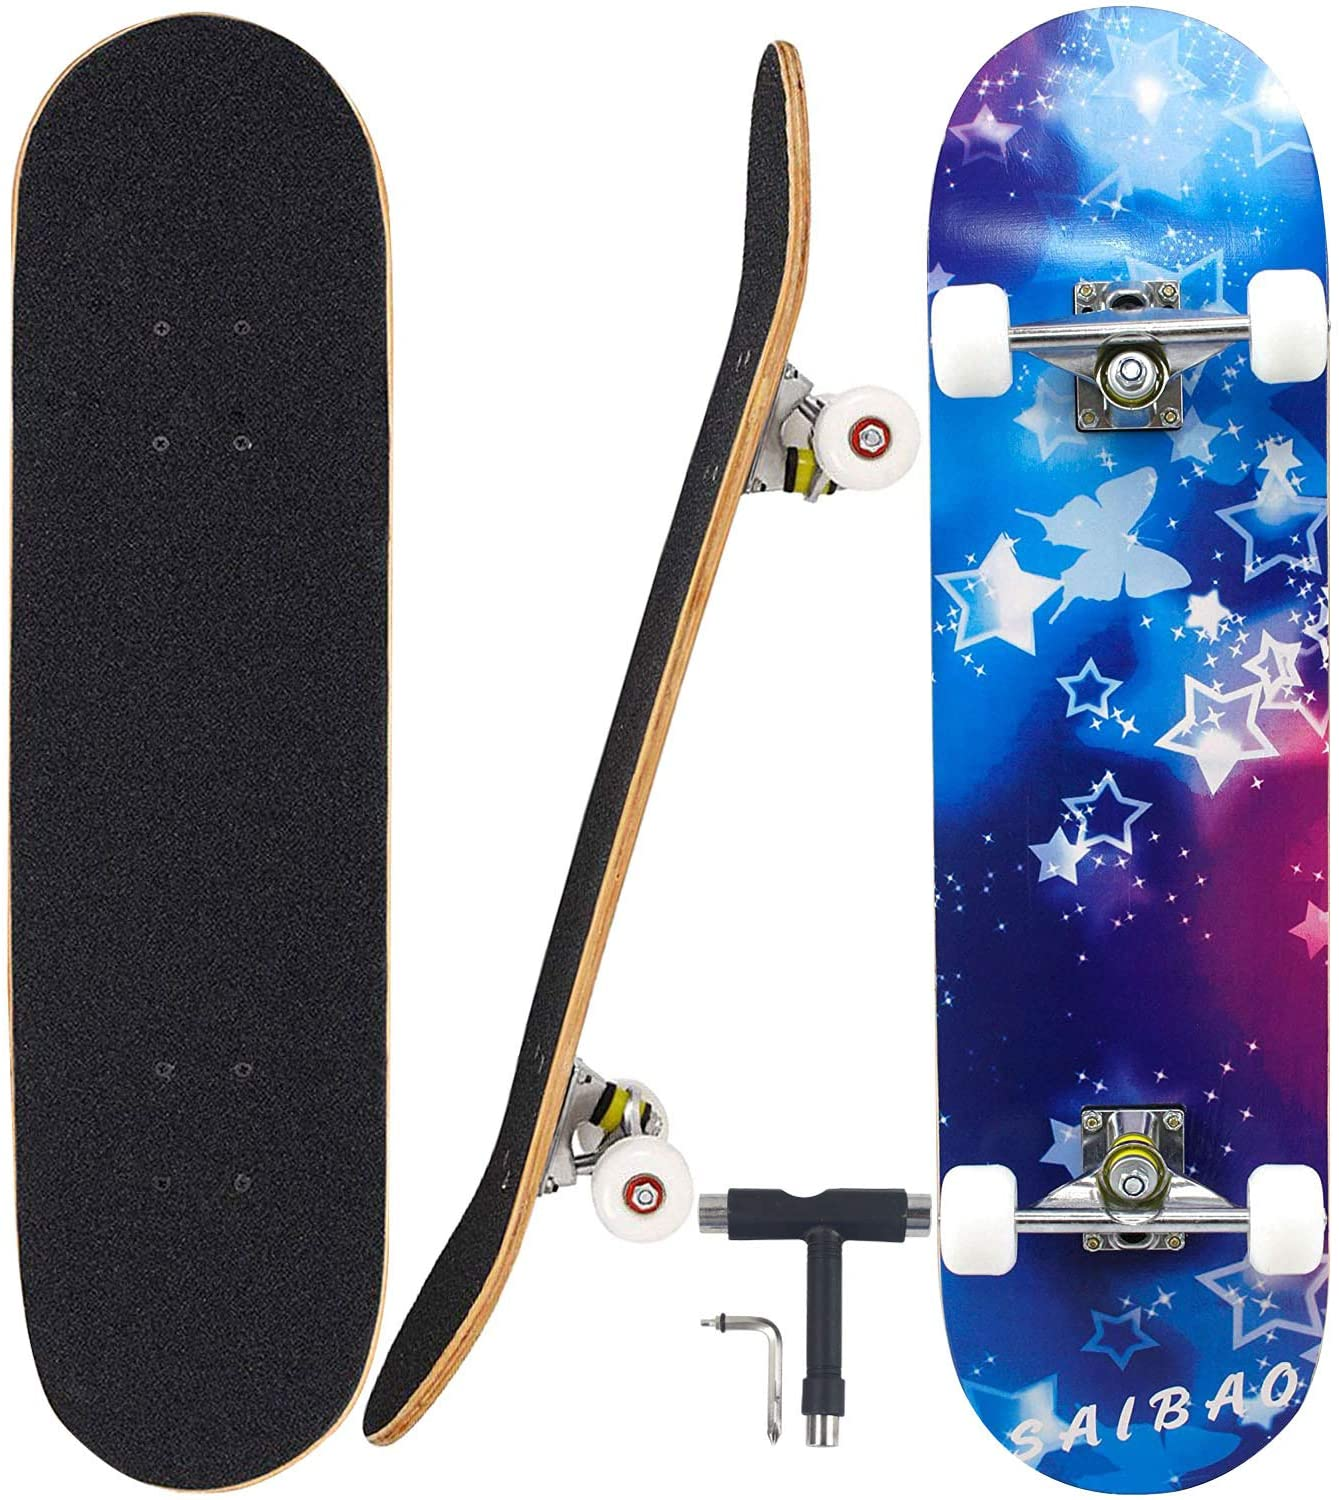 Cool Sale Skateboard 7 Layers Decks 31.5"x8" Pro Complete Skate Board OK8 